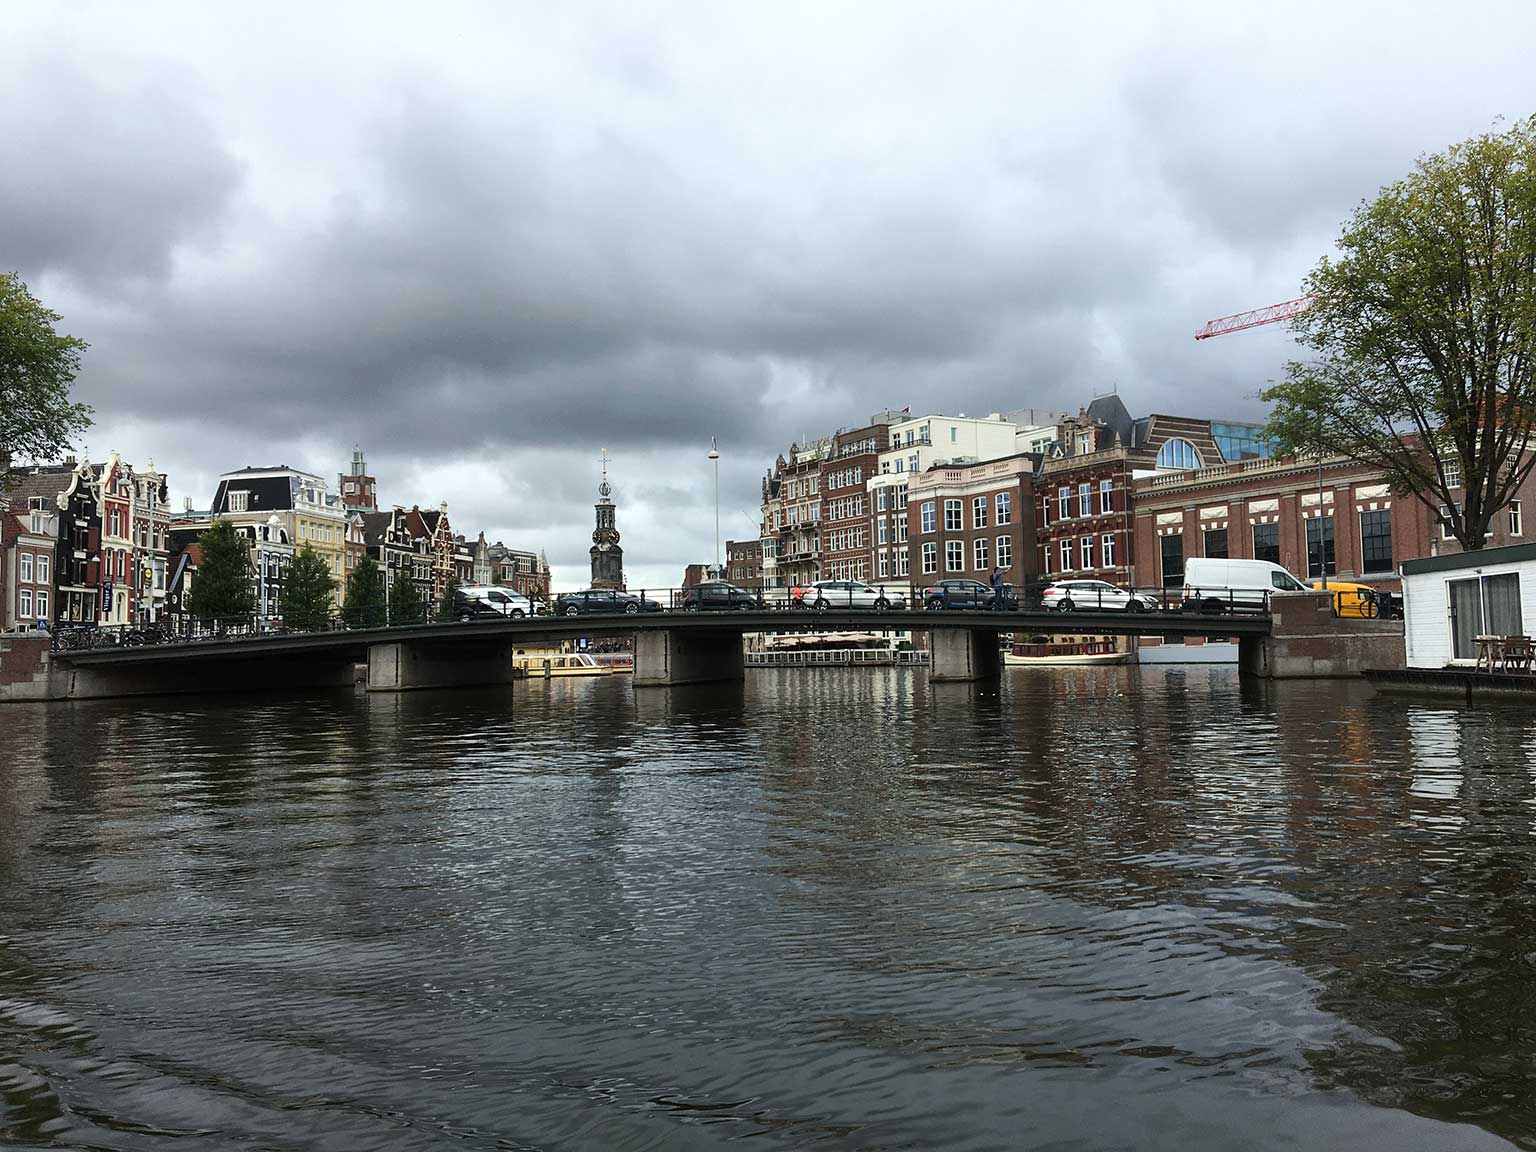 Munttoren, Amsterdam, in the distance behind the Halvemaansbrug, seen from the water of the Binnen Amstel